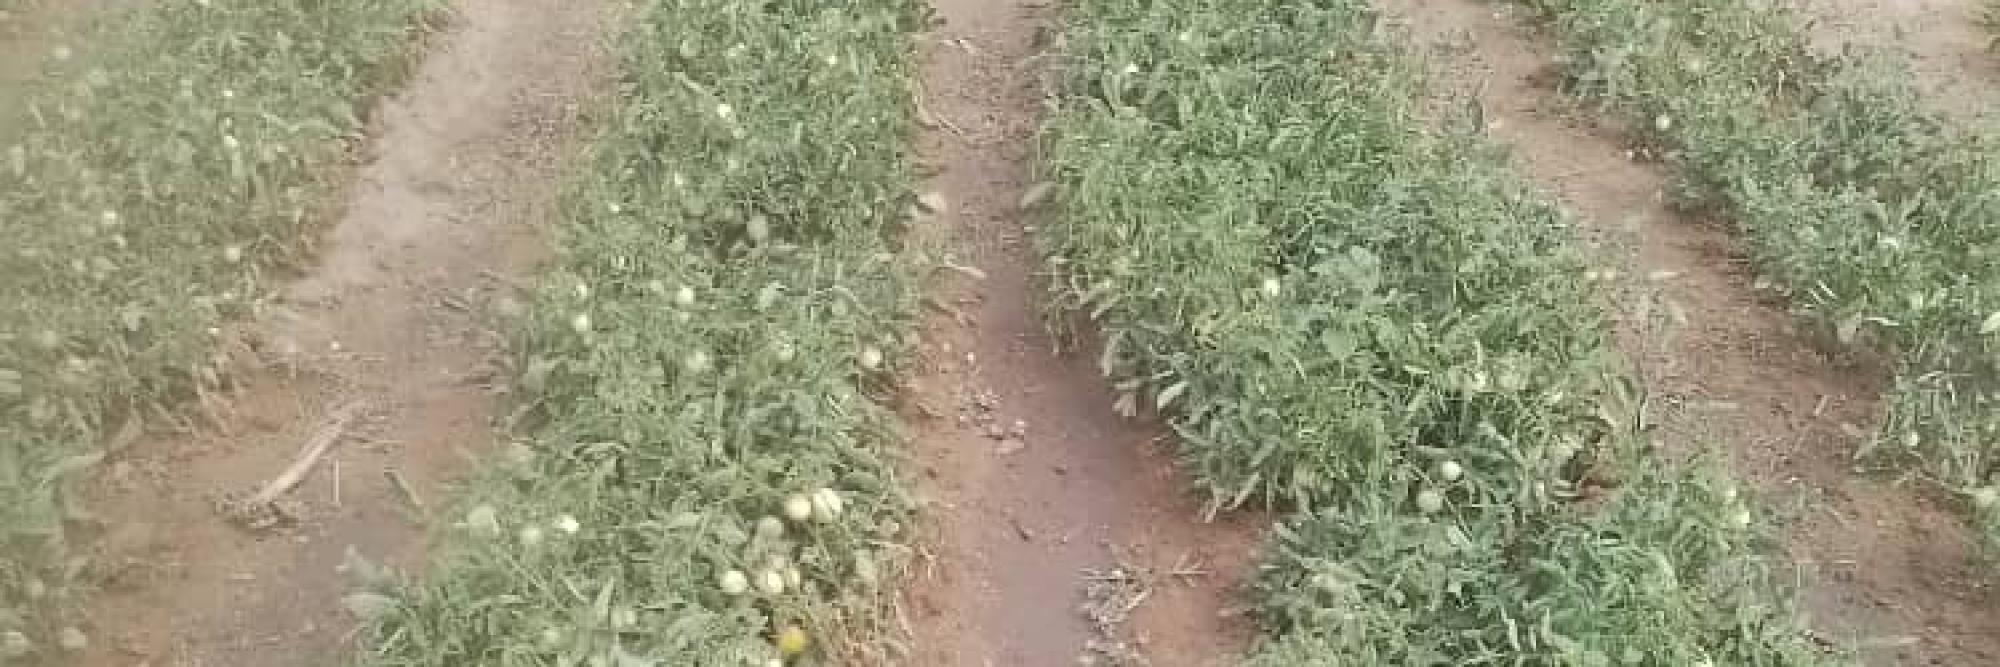 Champs de tomates a Dapaong Togo